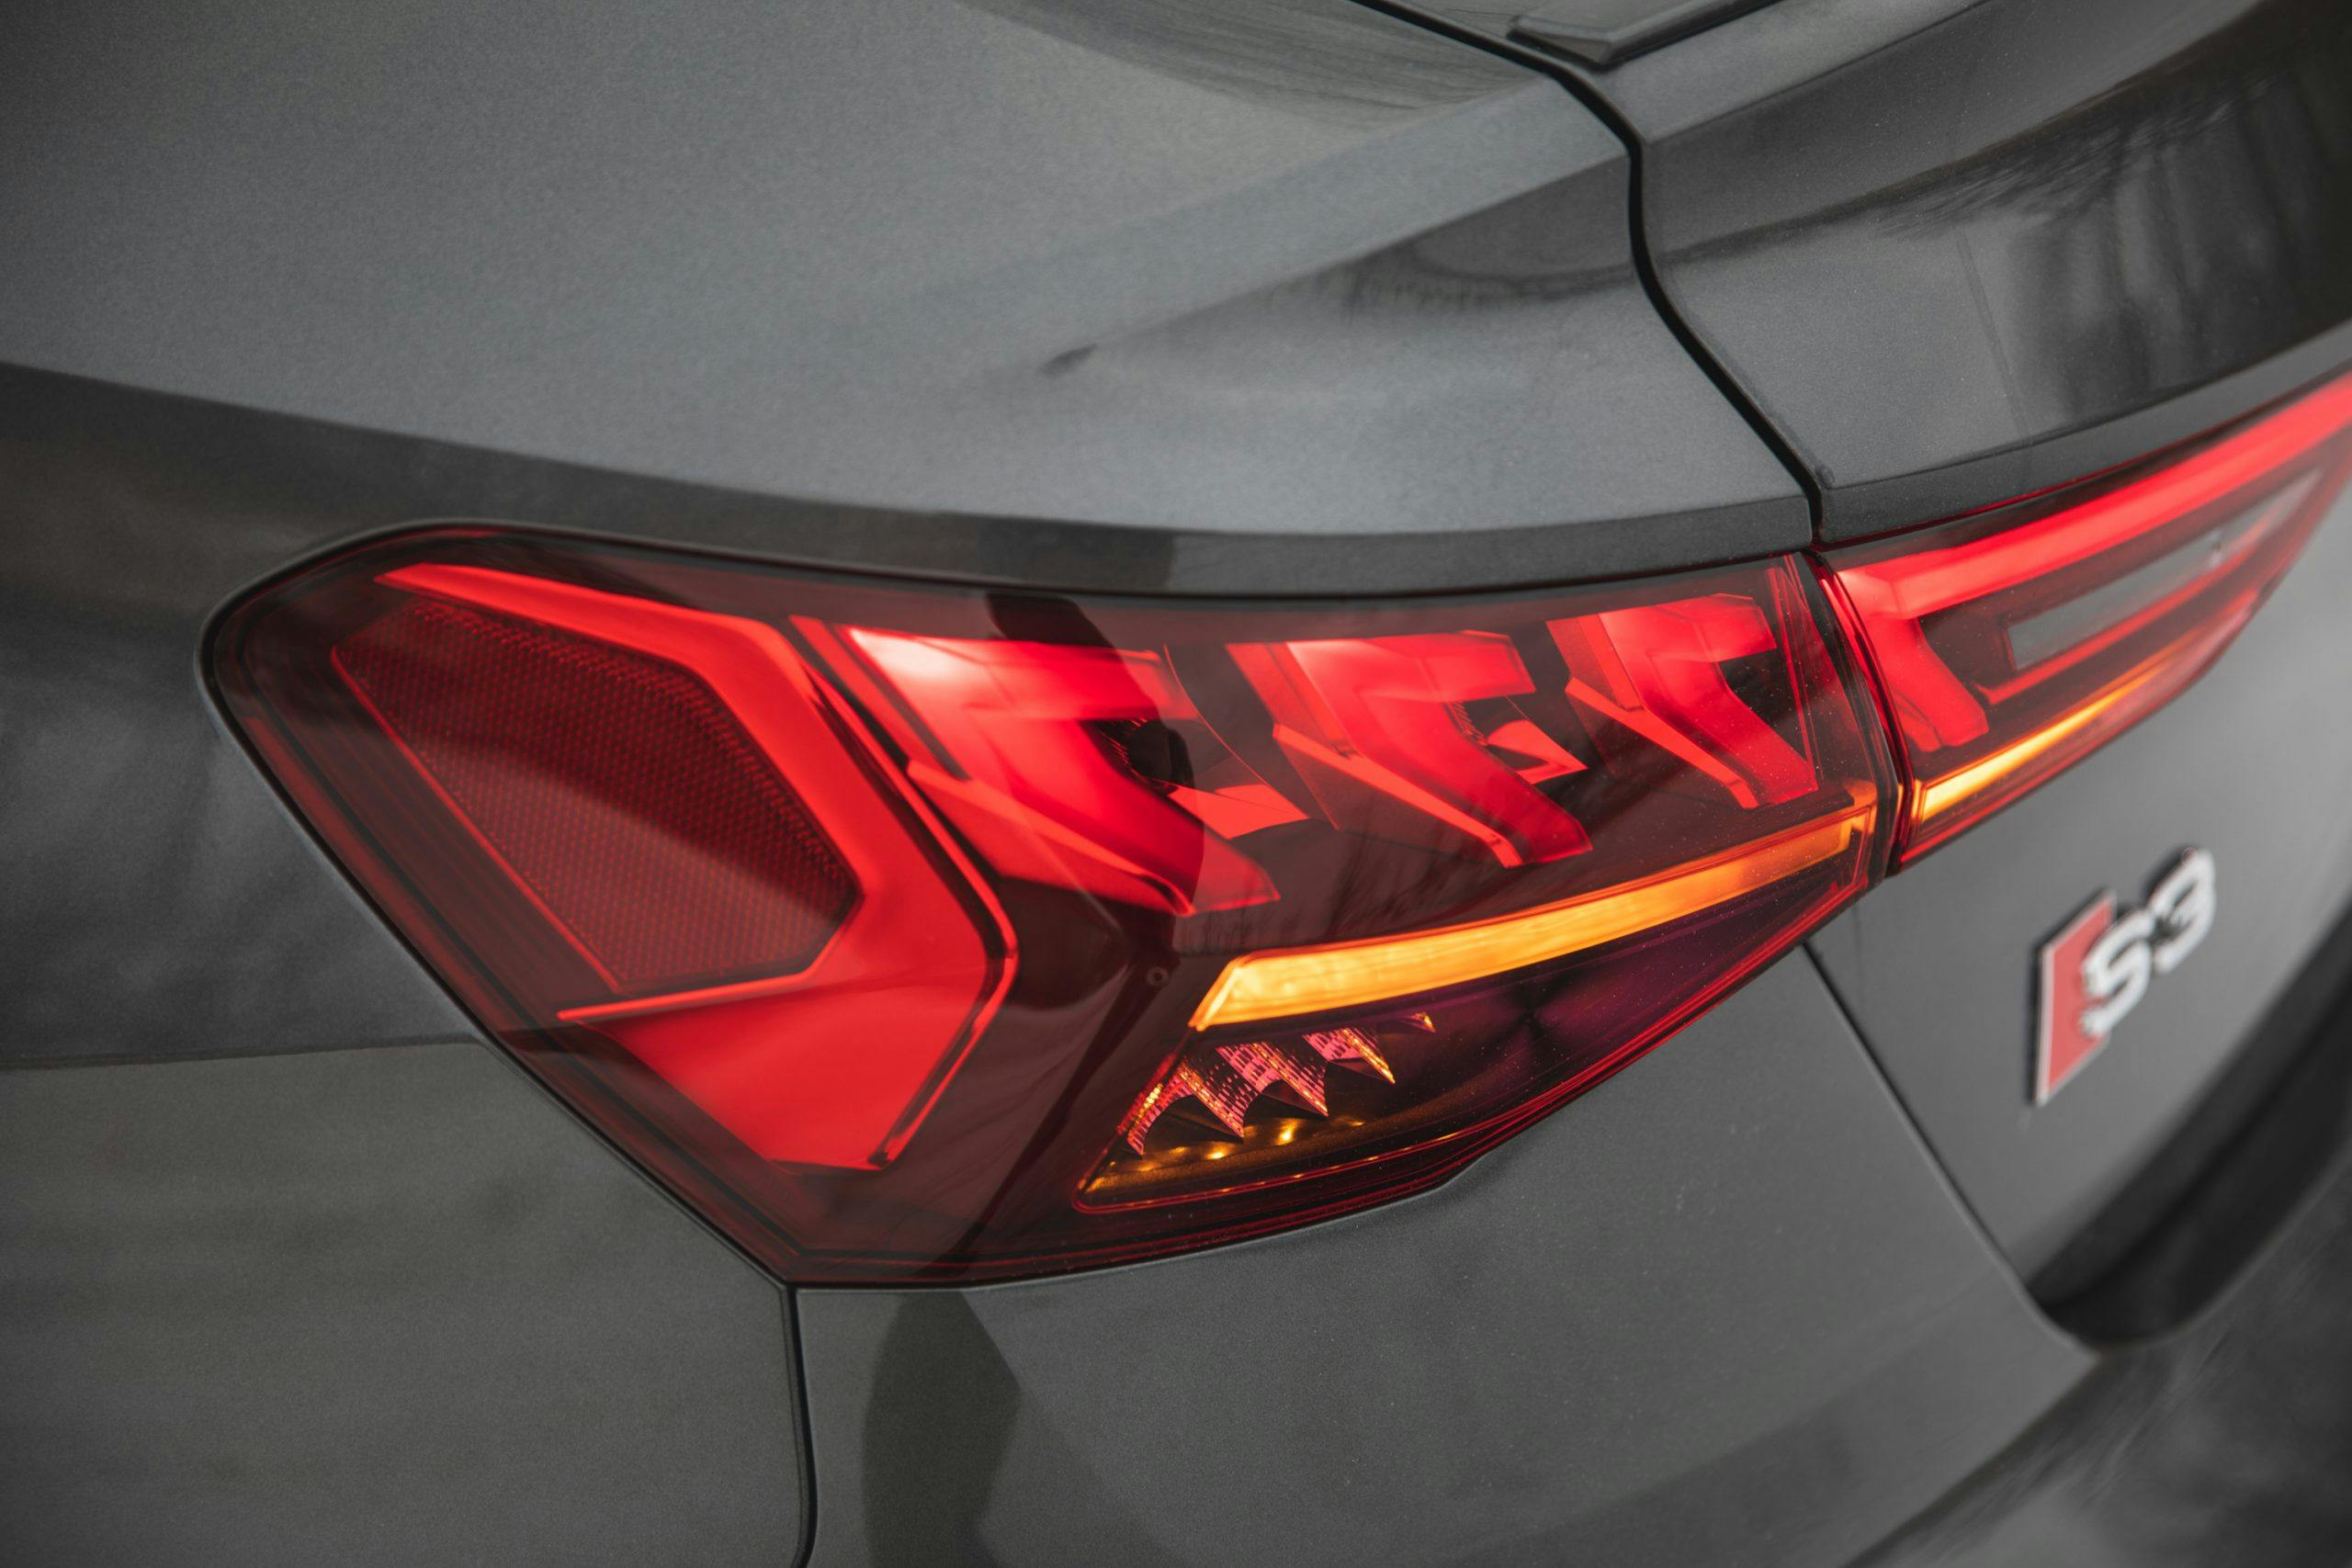 2022 Audi S3 rear taillight detail